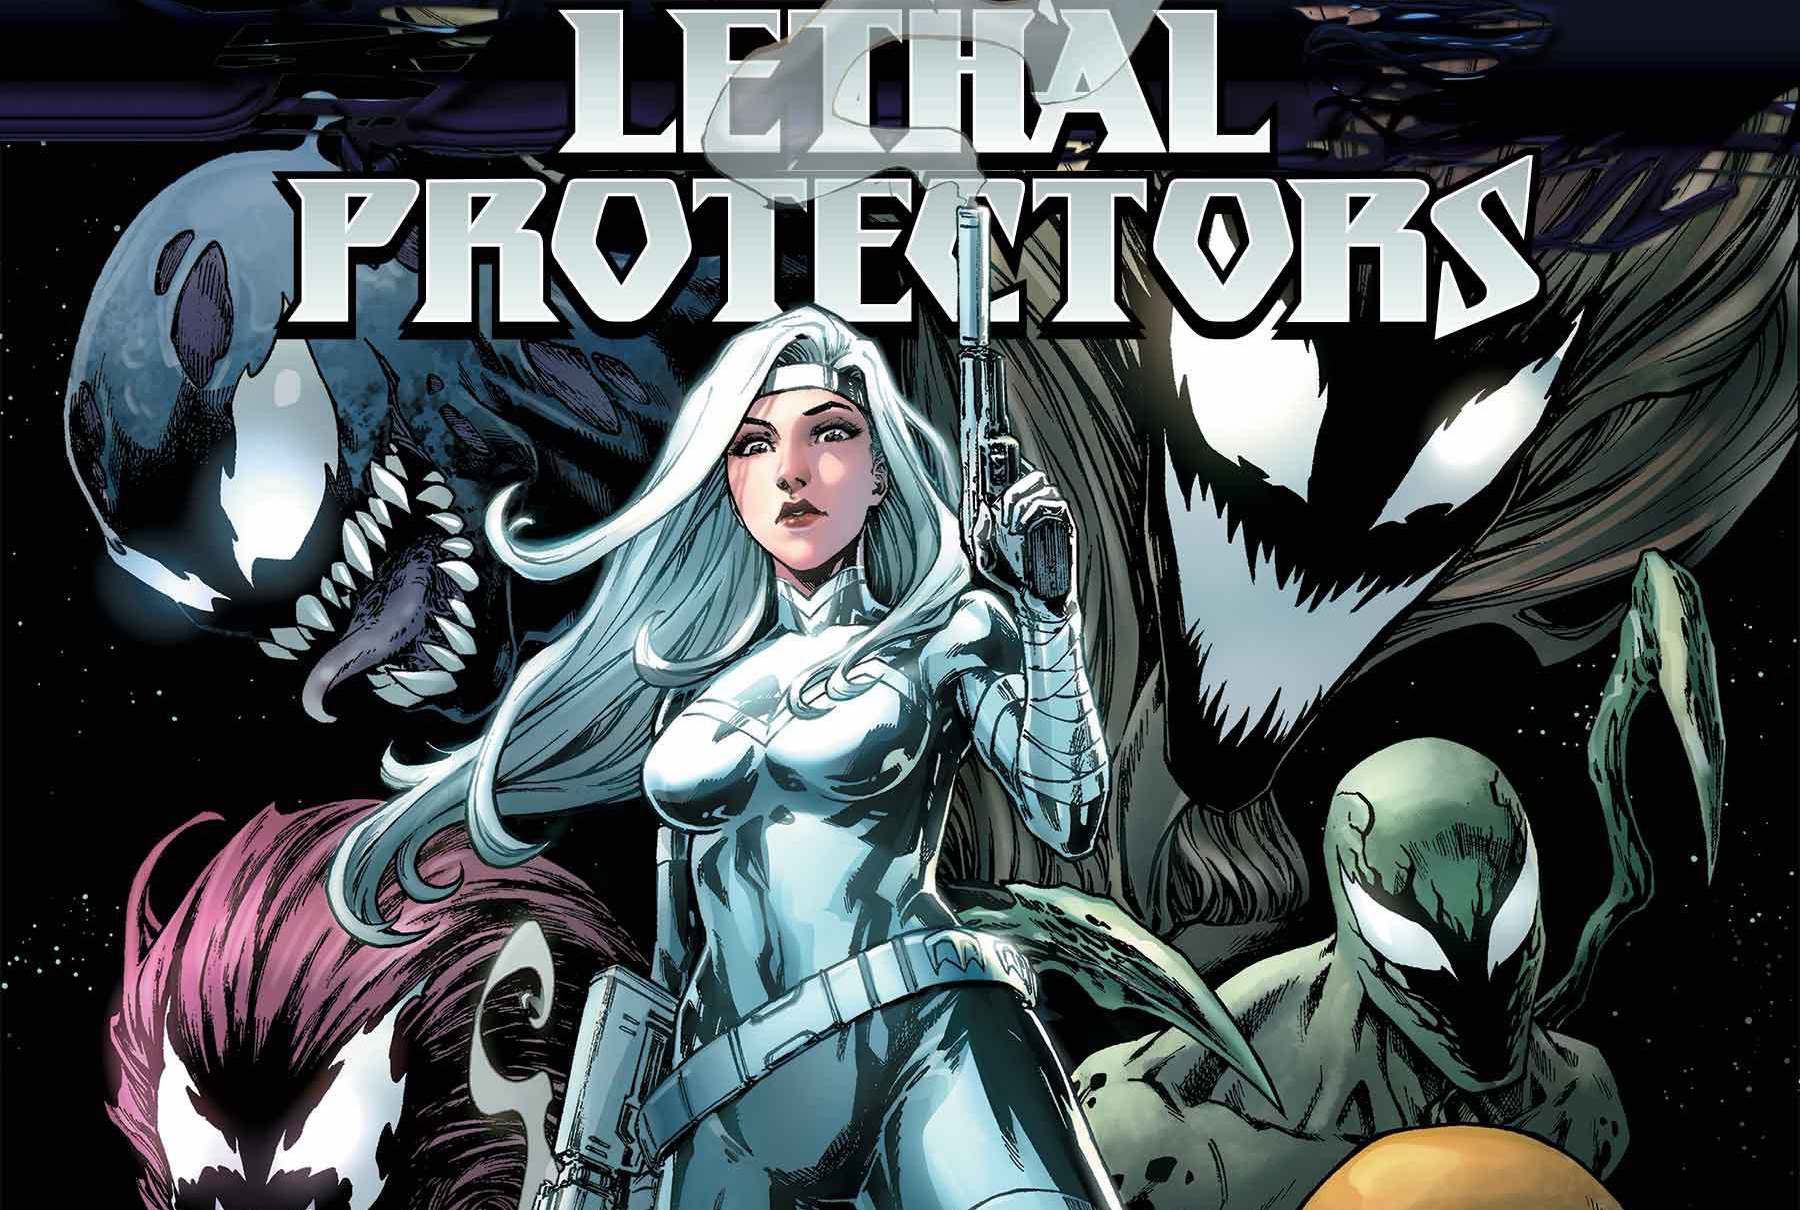 Silver Sable returns in 'Venom War: Lethal Protectors' #1 - Exclusive